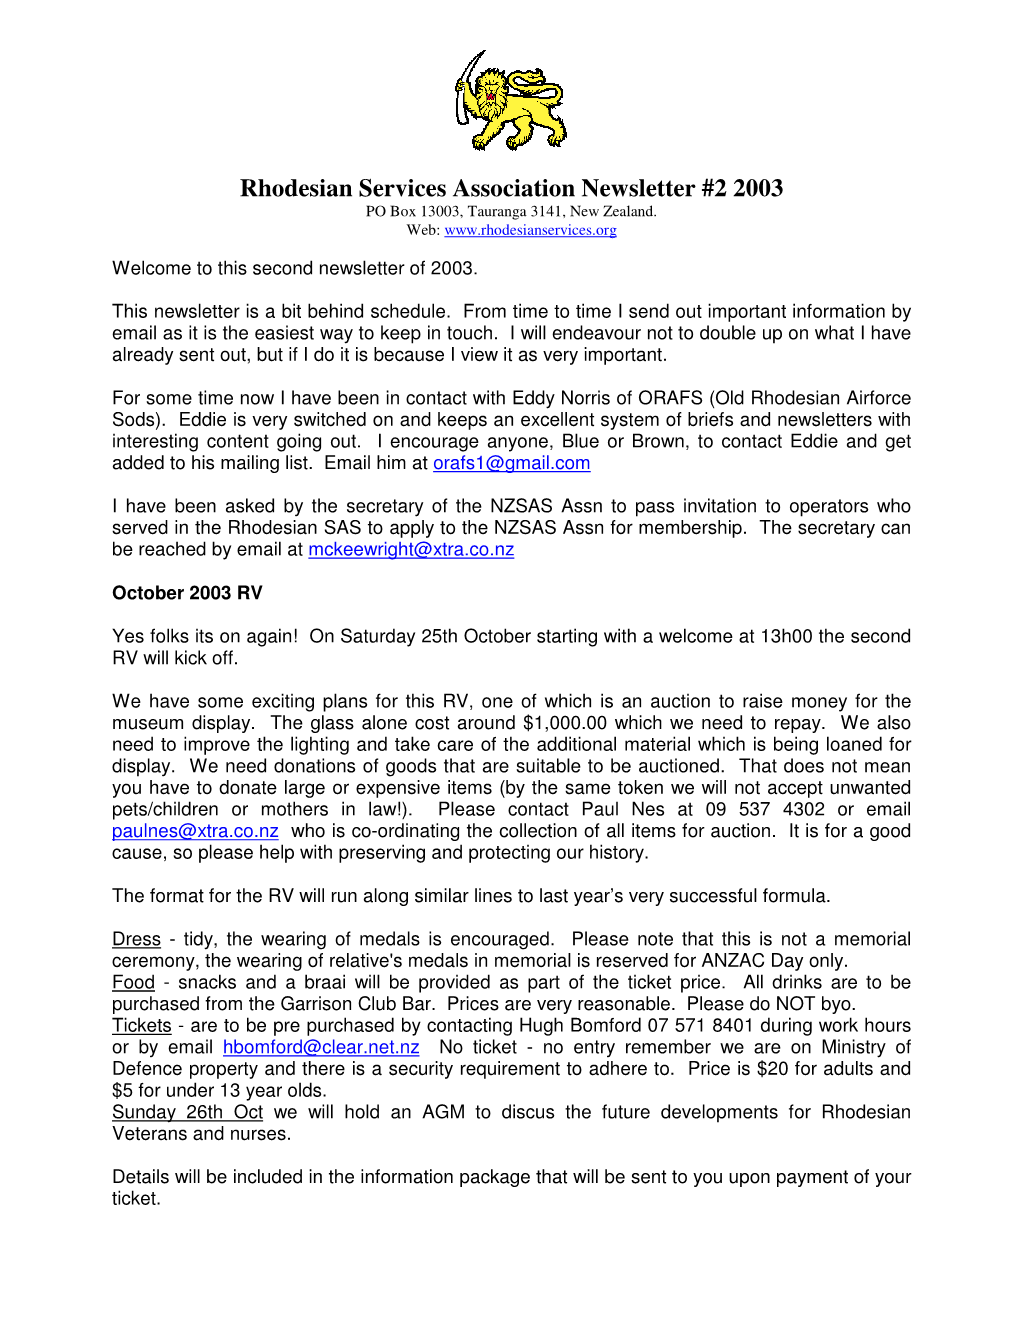 Rhodesian Services Association Newsletter #2 2003 PO Box 13003, Tauranga 3141, New Zealand